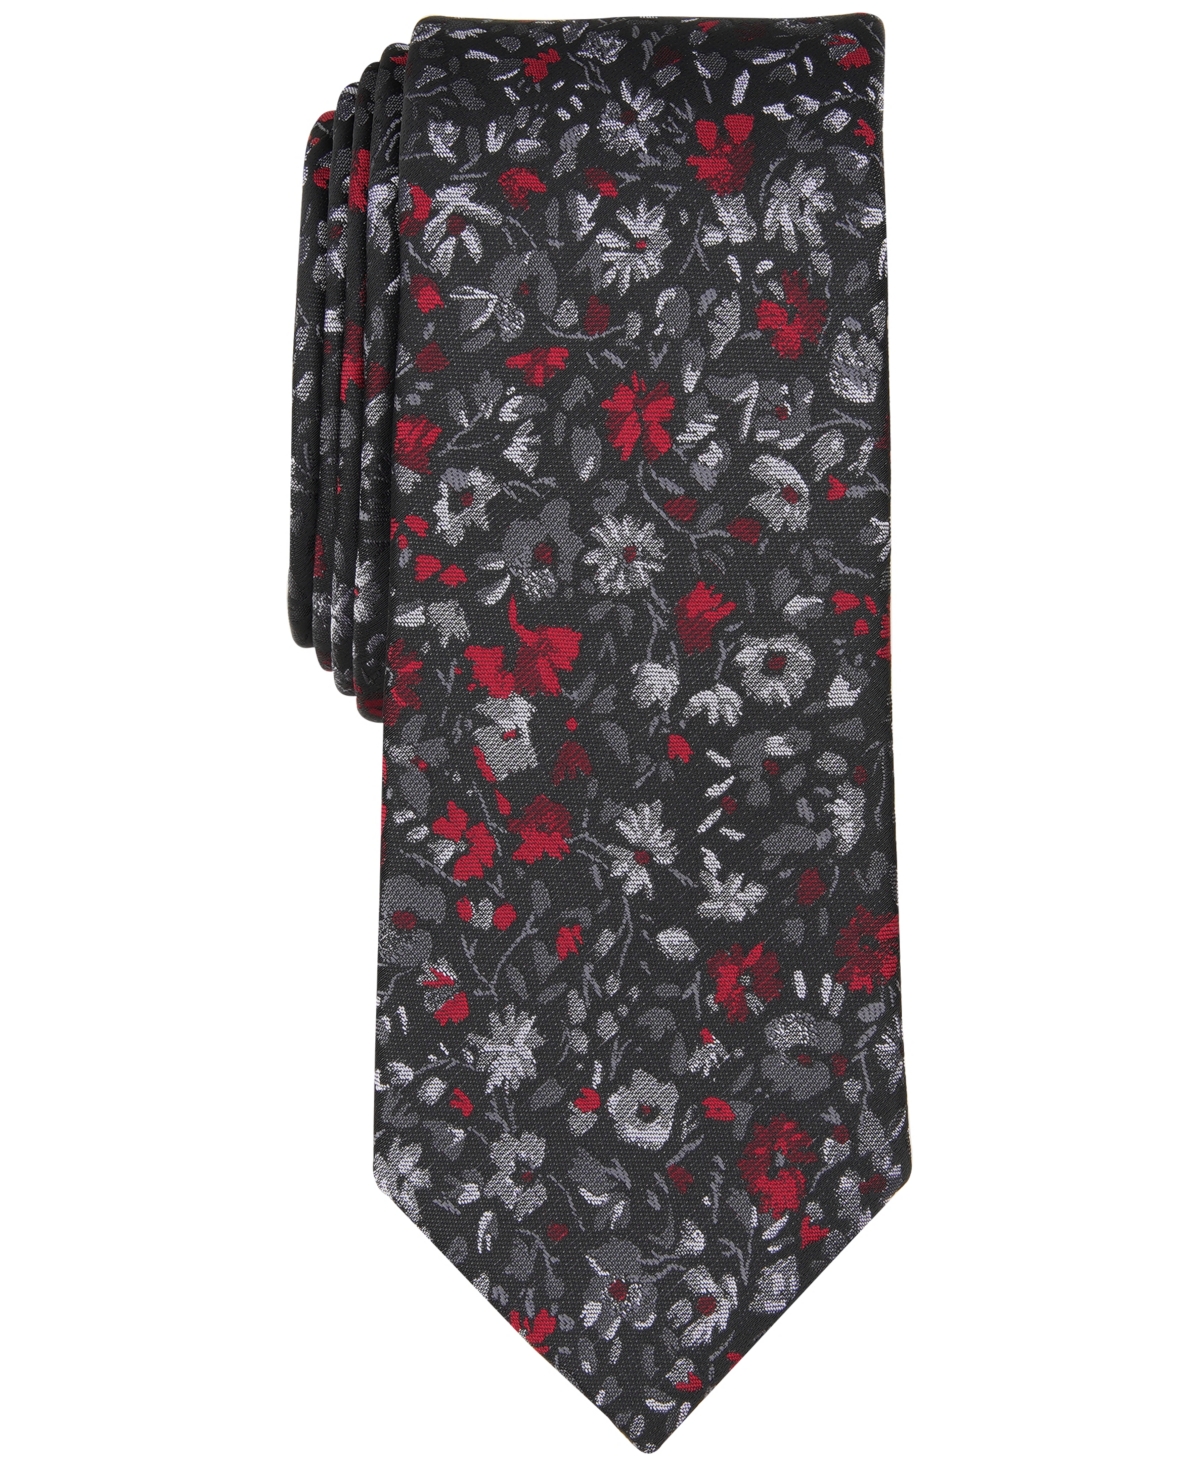 Men's Jenera Floral Tie, Created for Macy's - Black